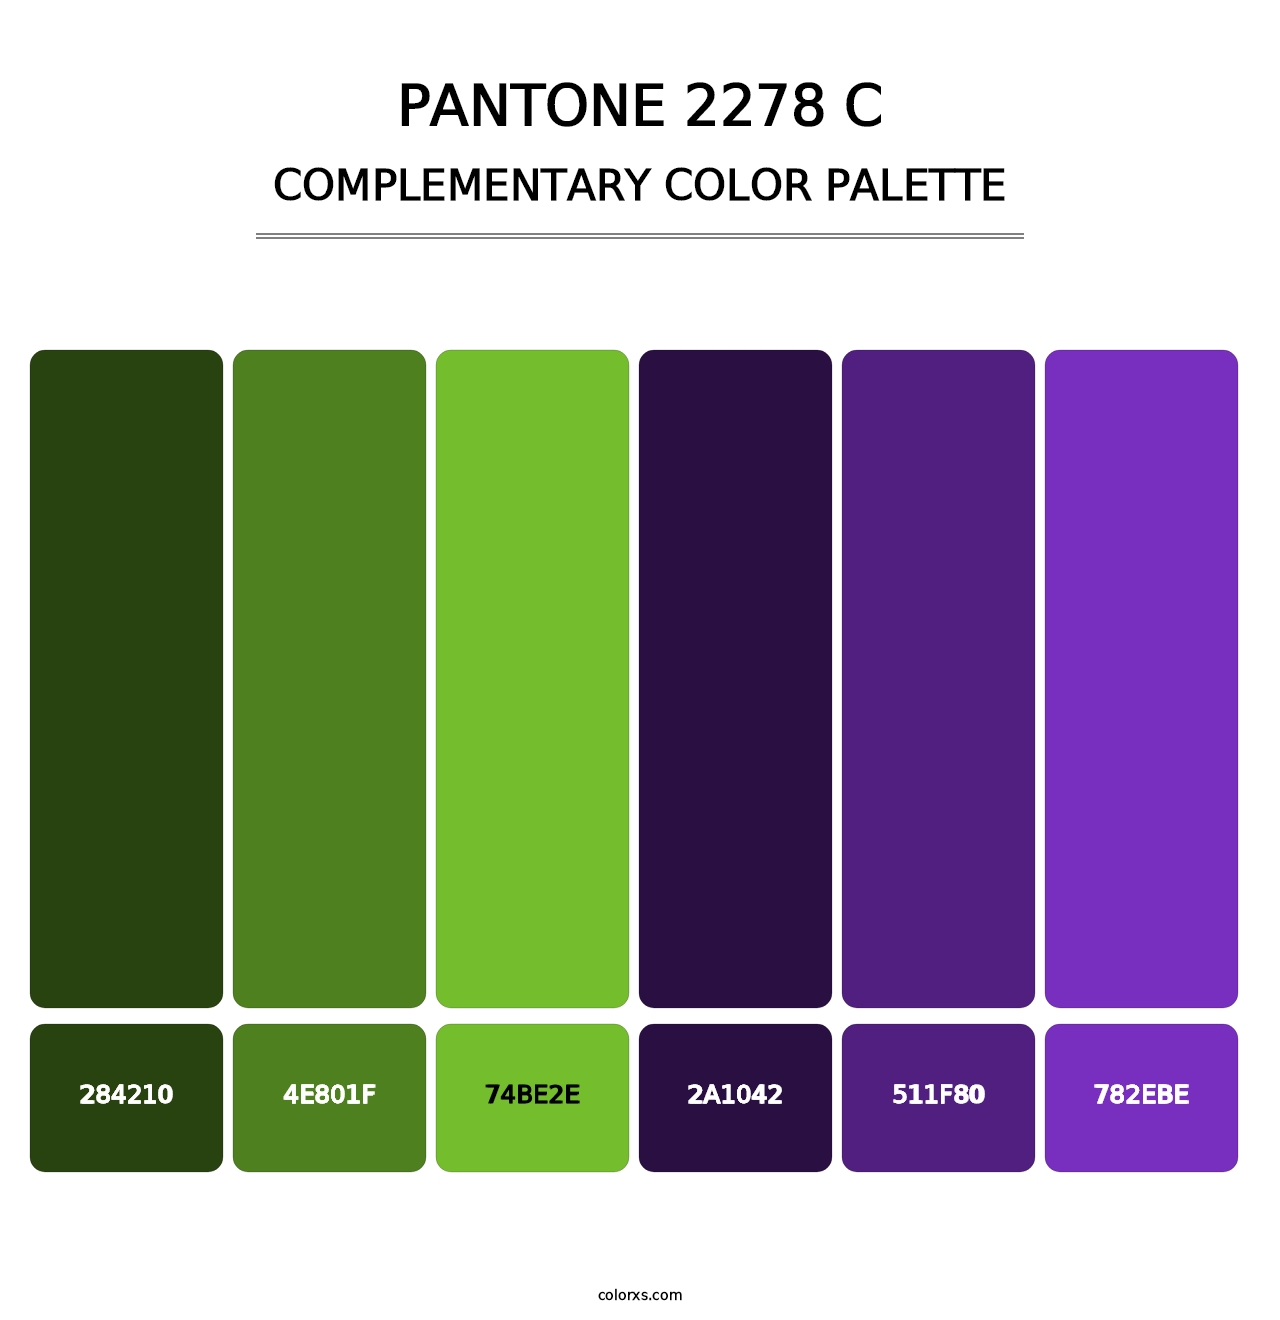 PANTONE 2278 C - Complementary Color Palette